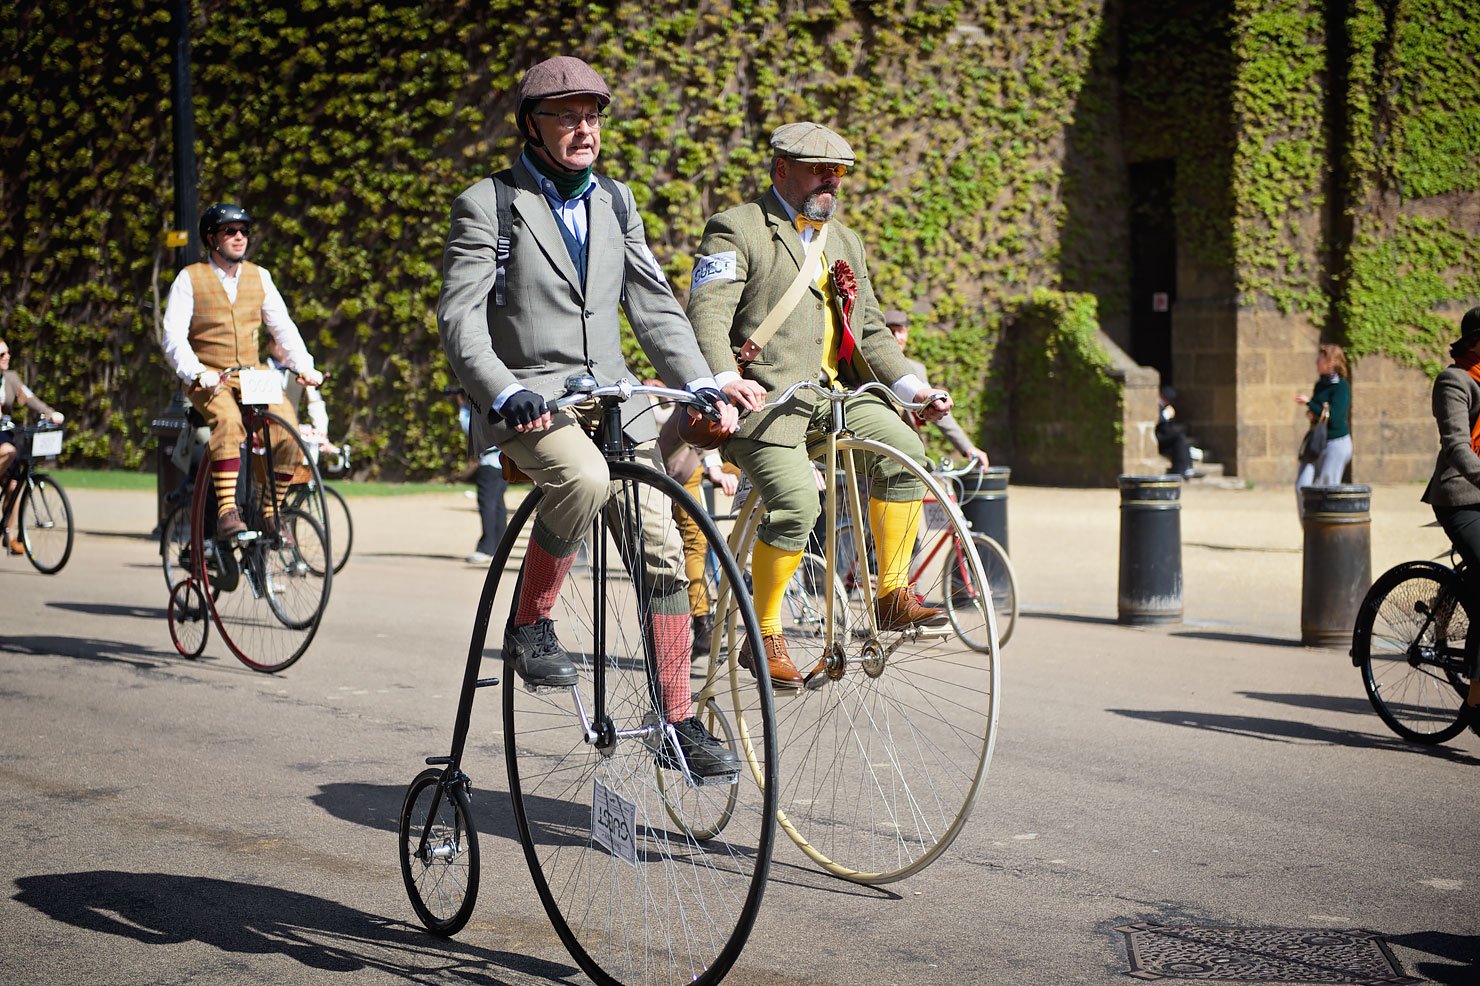 The Tweed Run London 2015: London's most stylish bike ride - Men on high wheelers